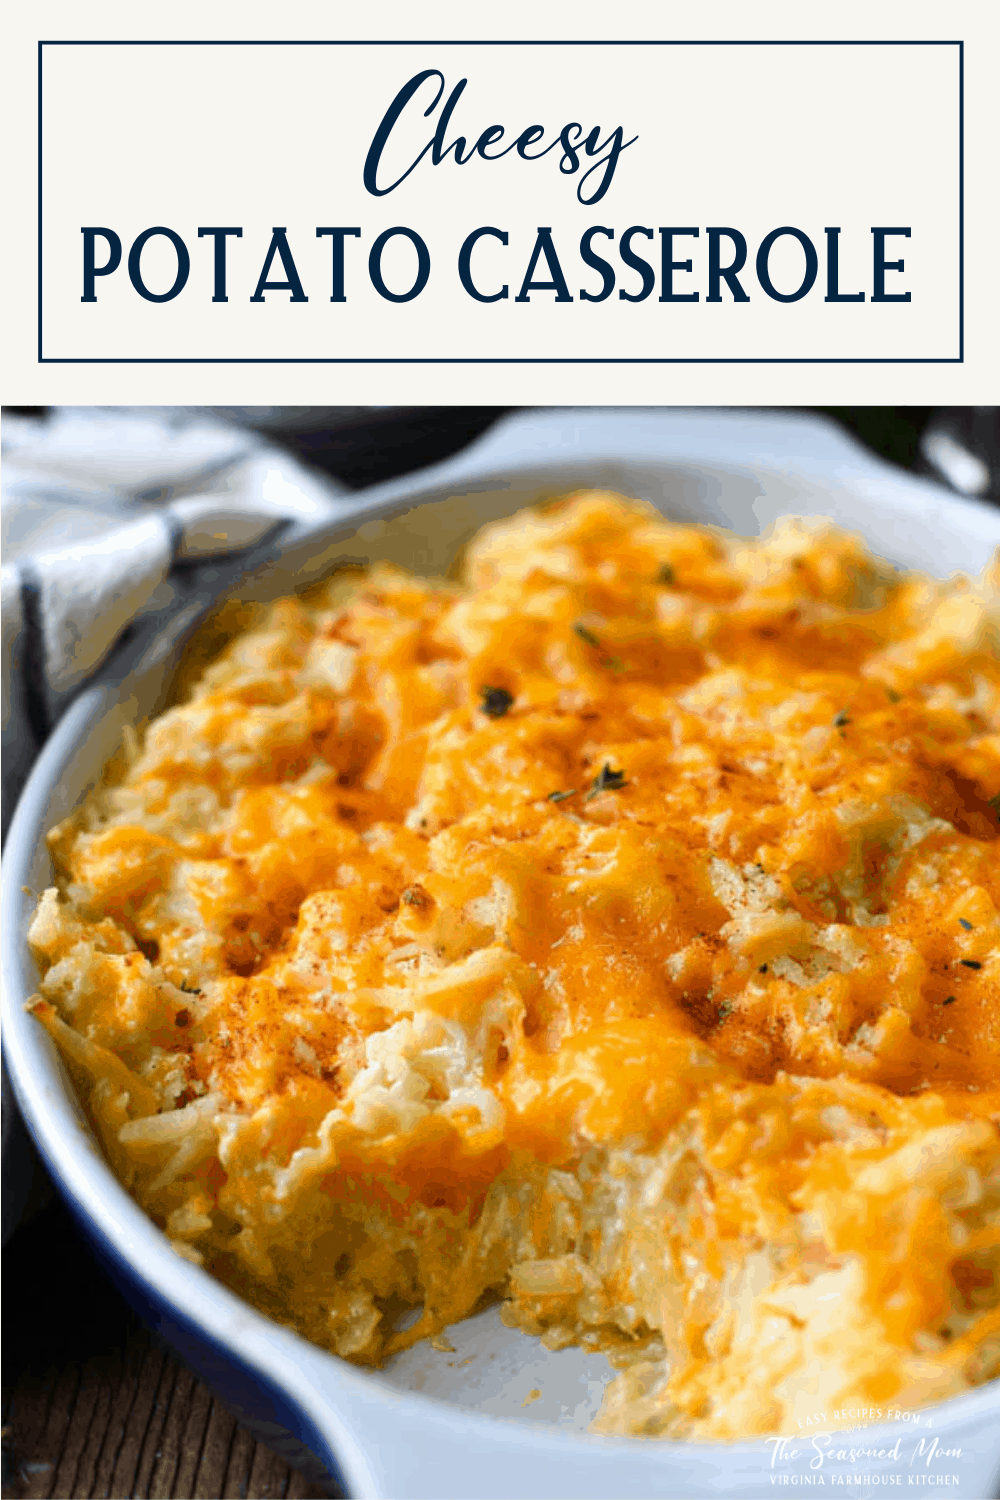 Aunt Bee's Cheesy Potato Casserole (3 Ingredients!) - The Seasoned Mom